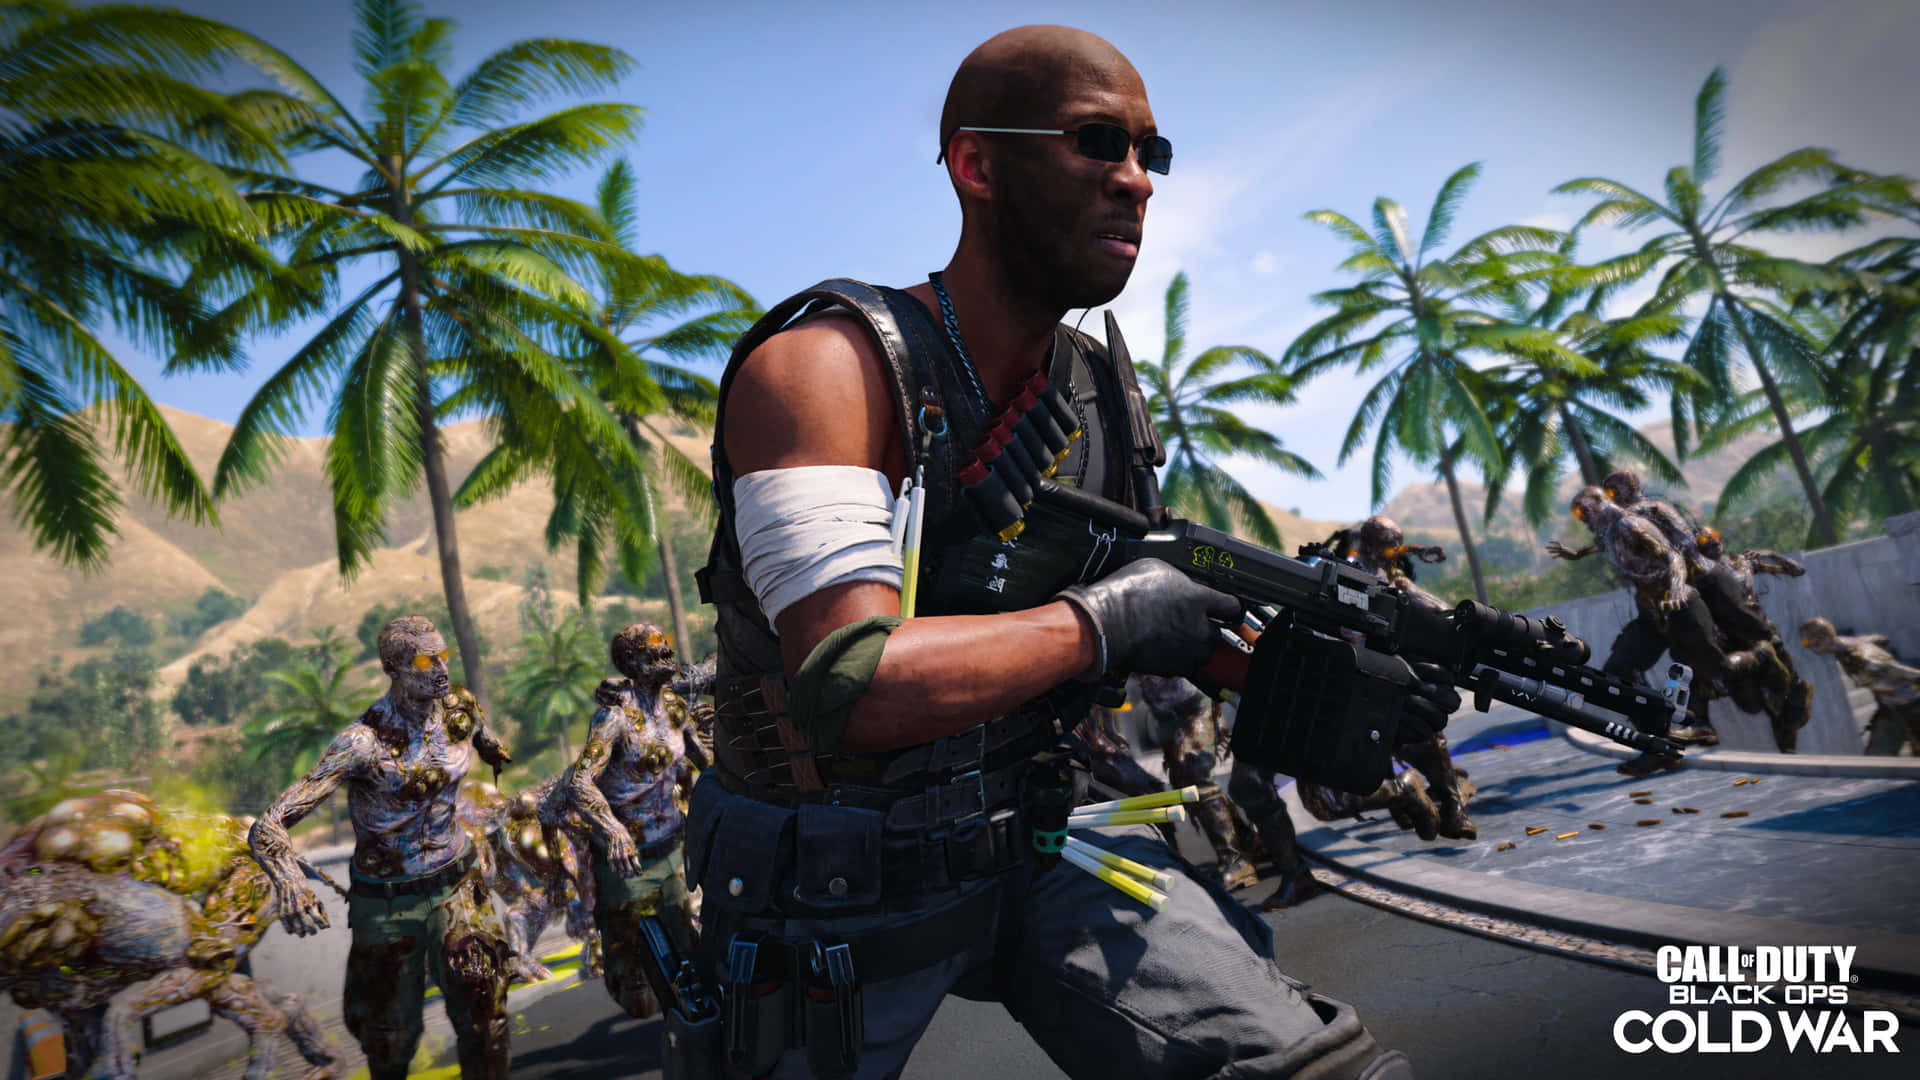 Penumbraskin Hd Call Of Duty Black Ops Cold War Hintergrund